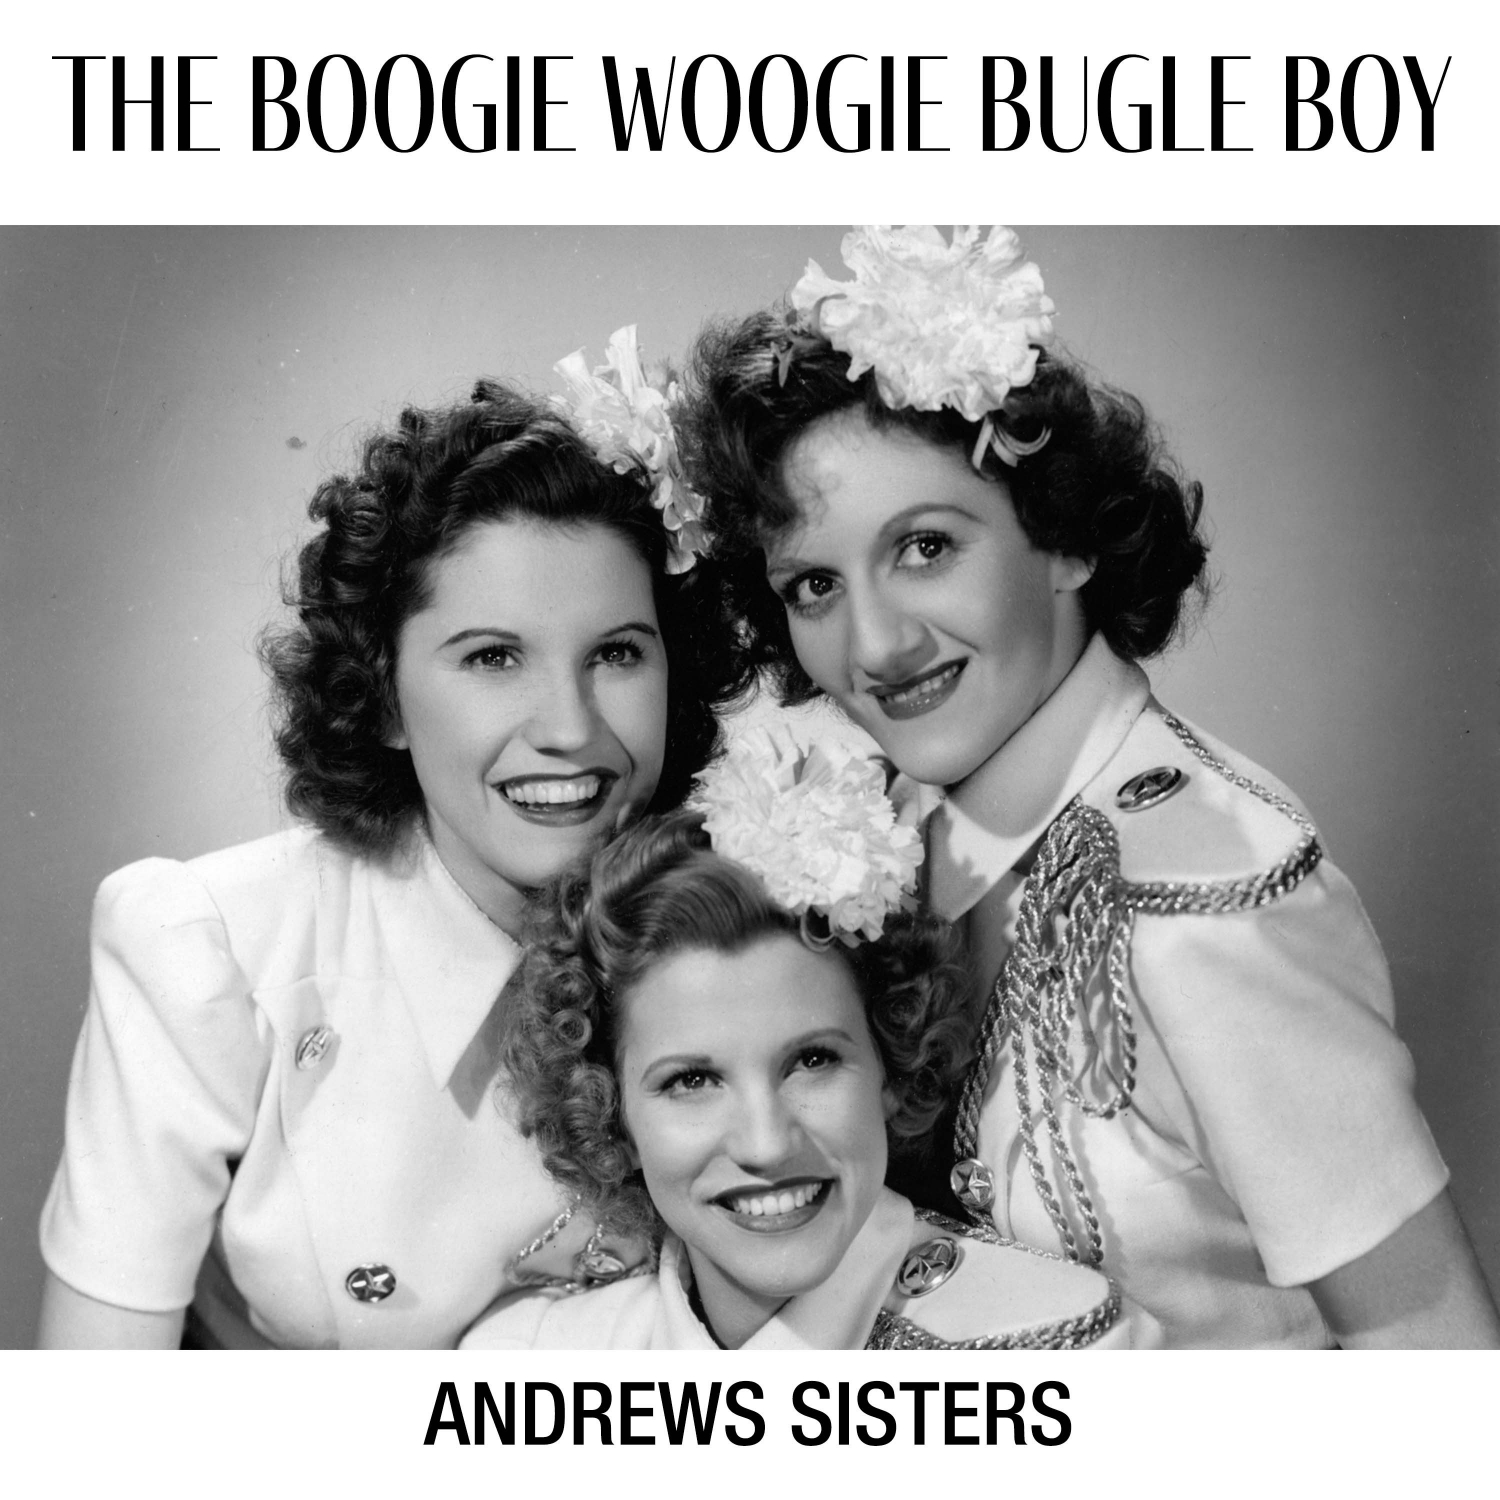 Andrew's sisters. Сестры Эндрюс буги вуги. Эндрю Систерс. The Andrews sisters фото. The Andrews sisters в старости.